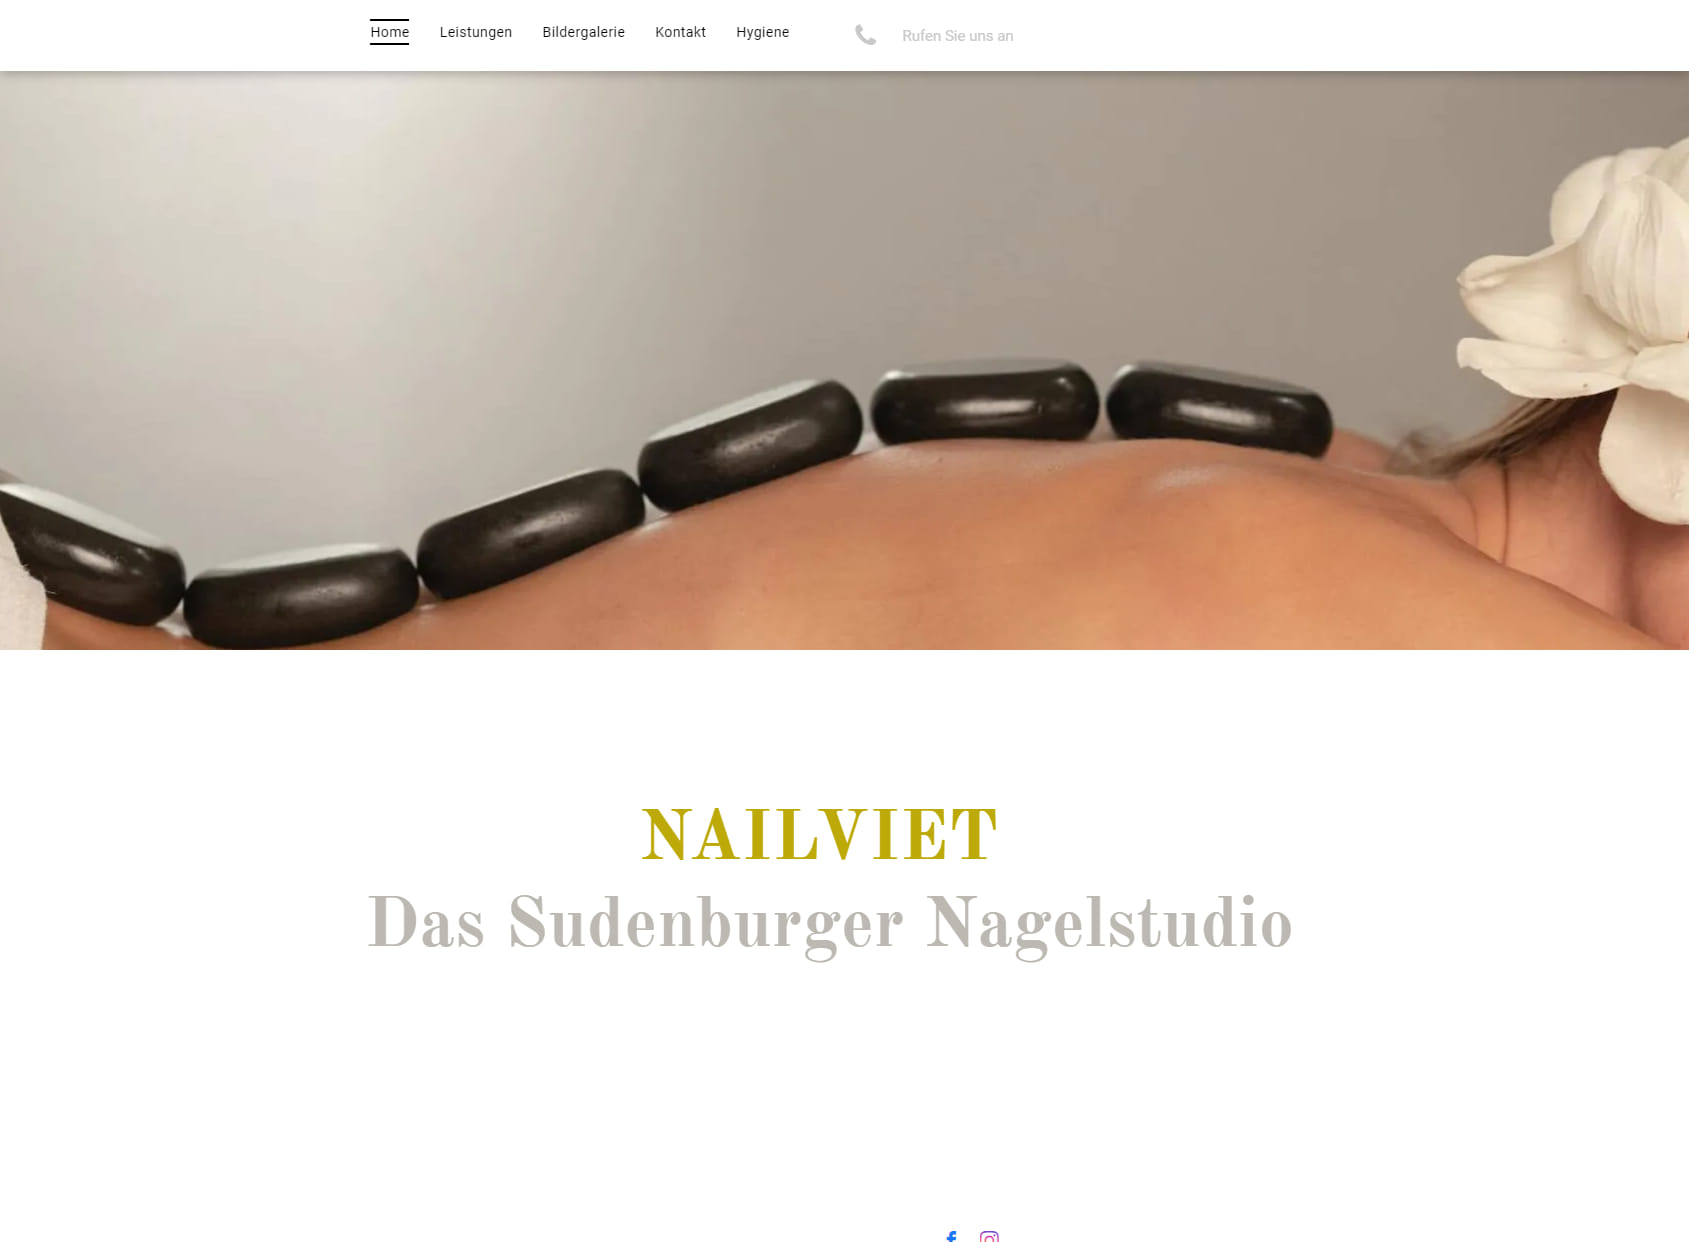 NailViet Das Sudenburger Nagelstudio